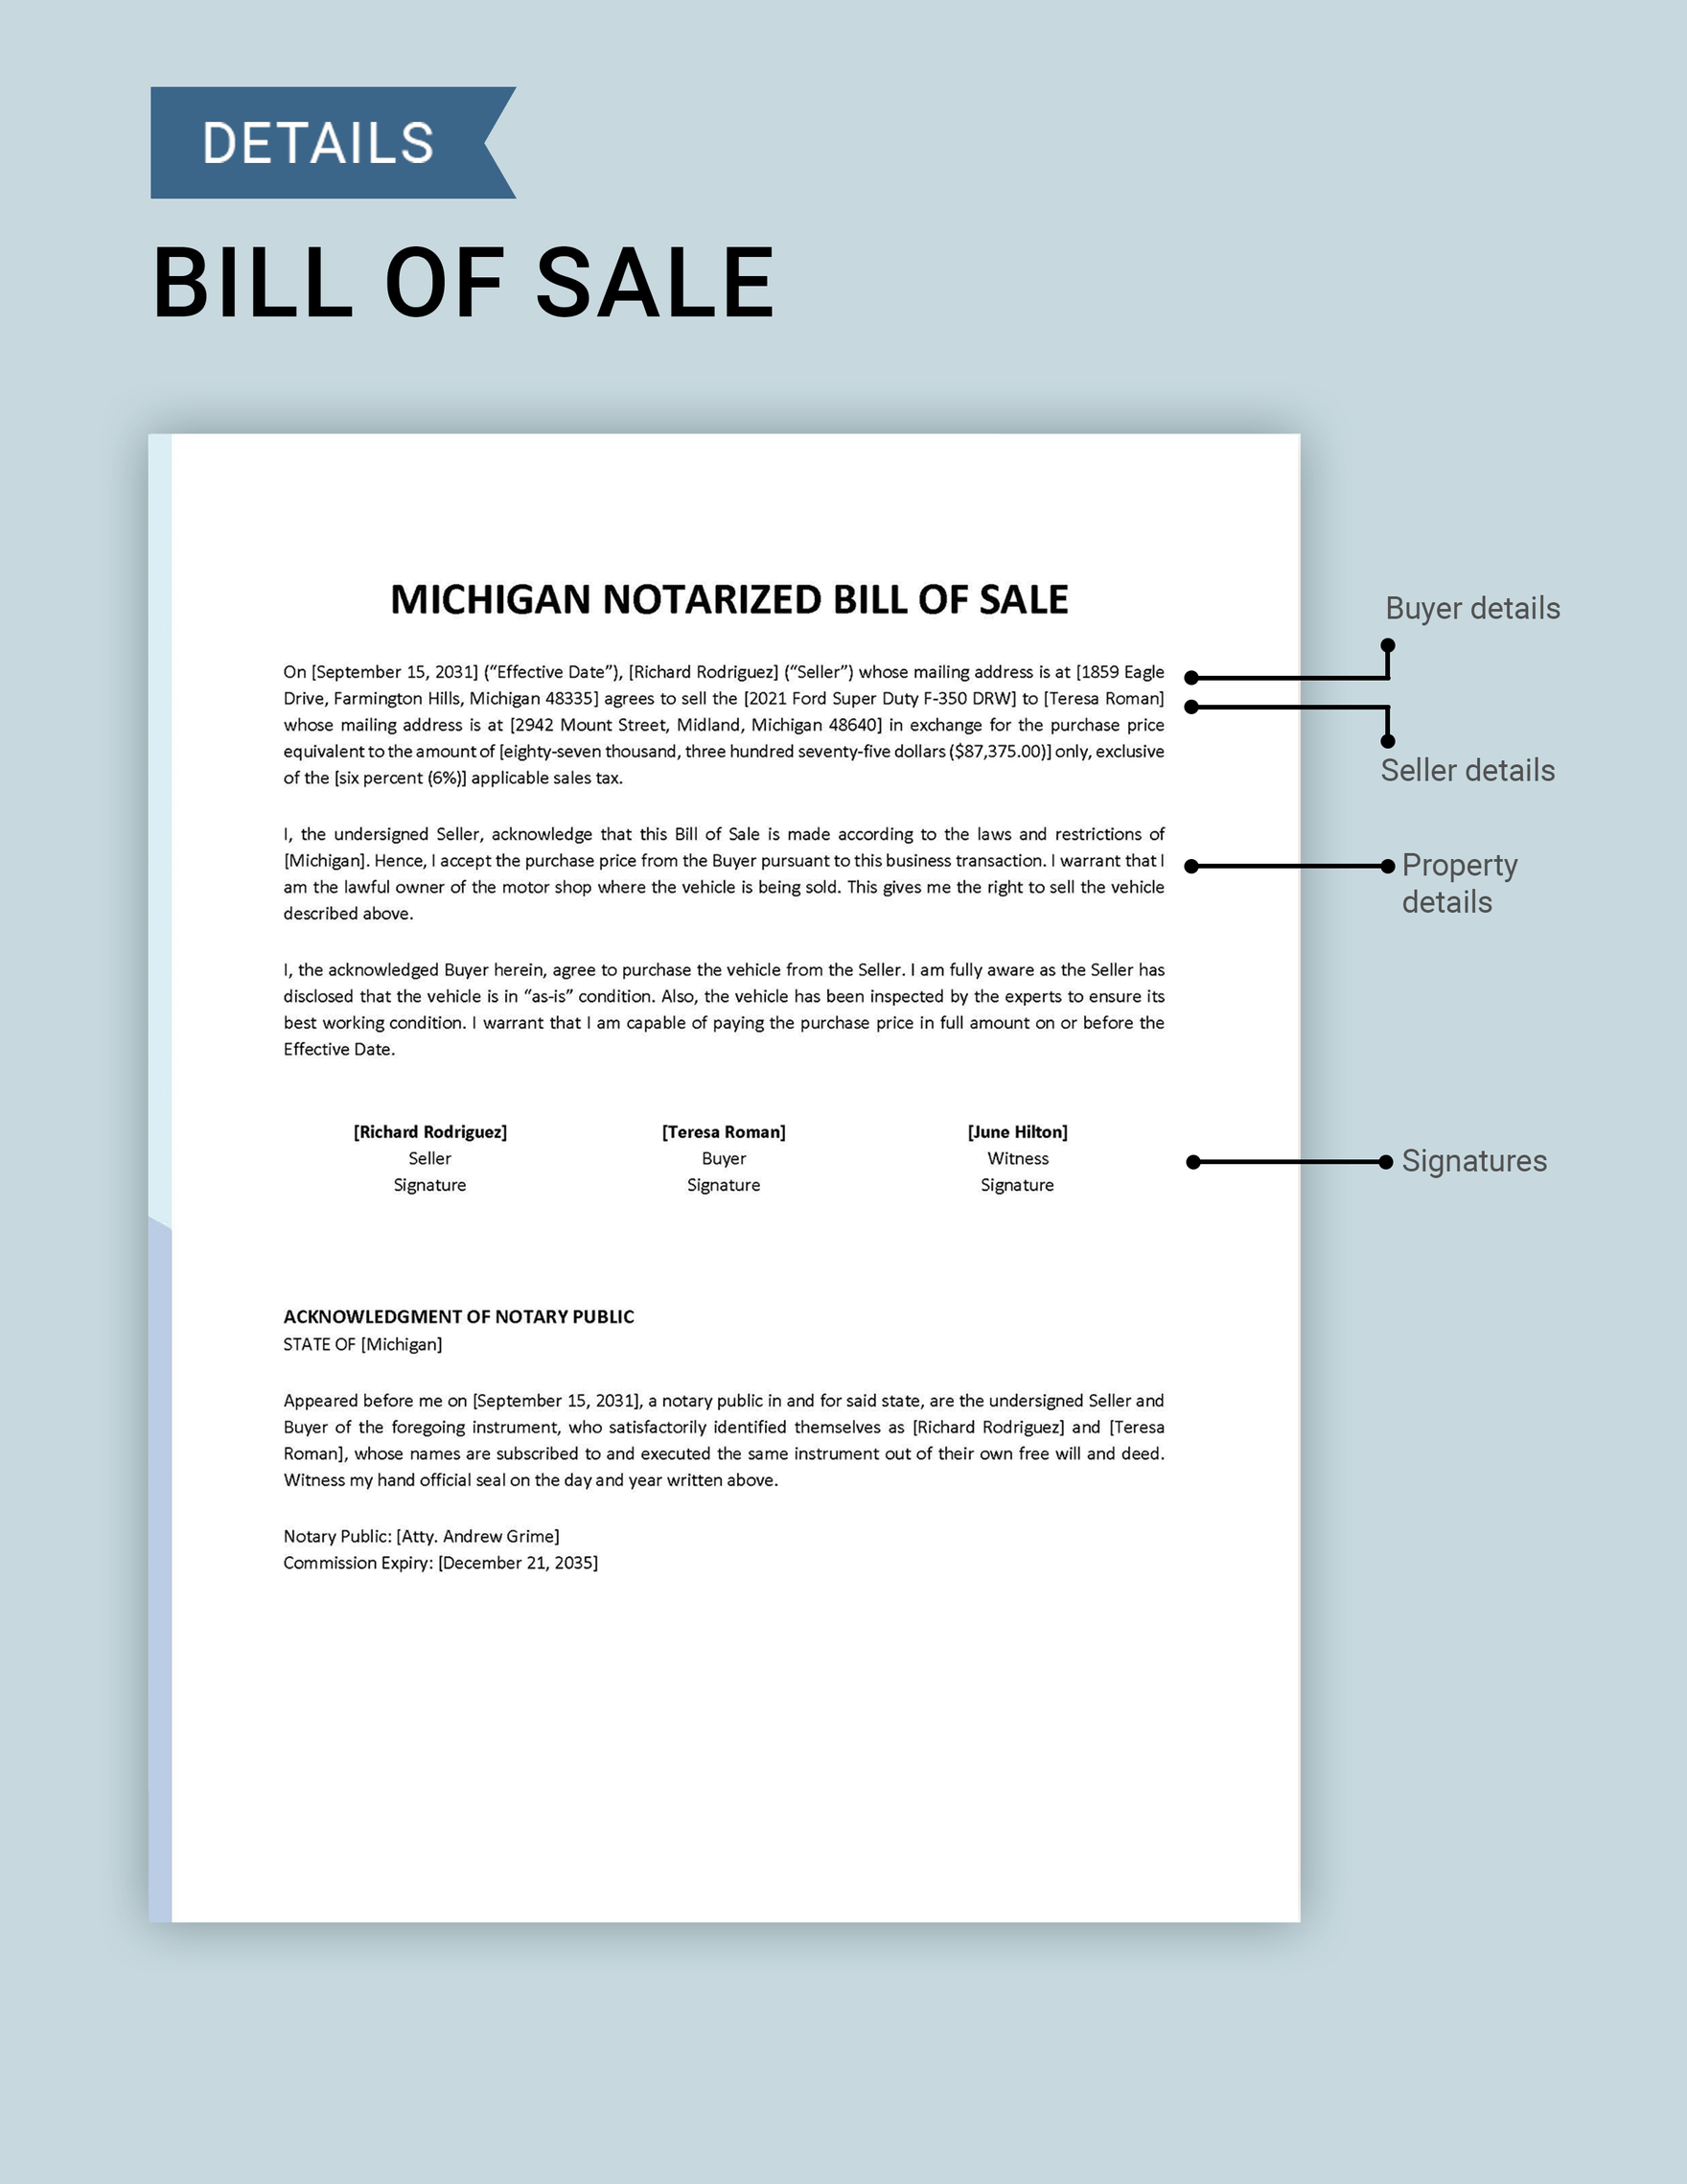 Michigan Notarized Bill of Sale Template